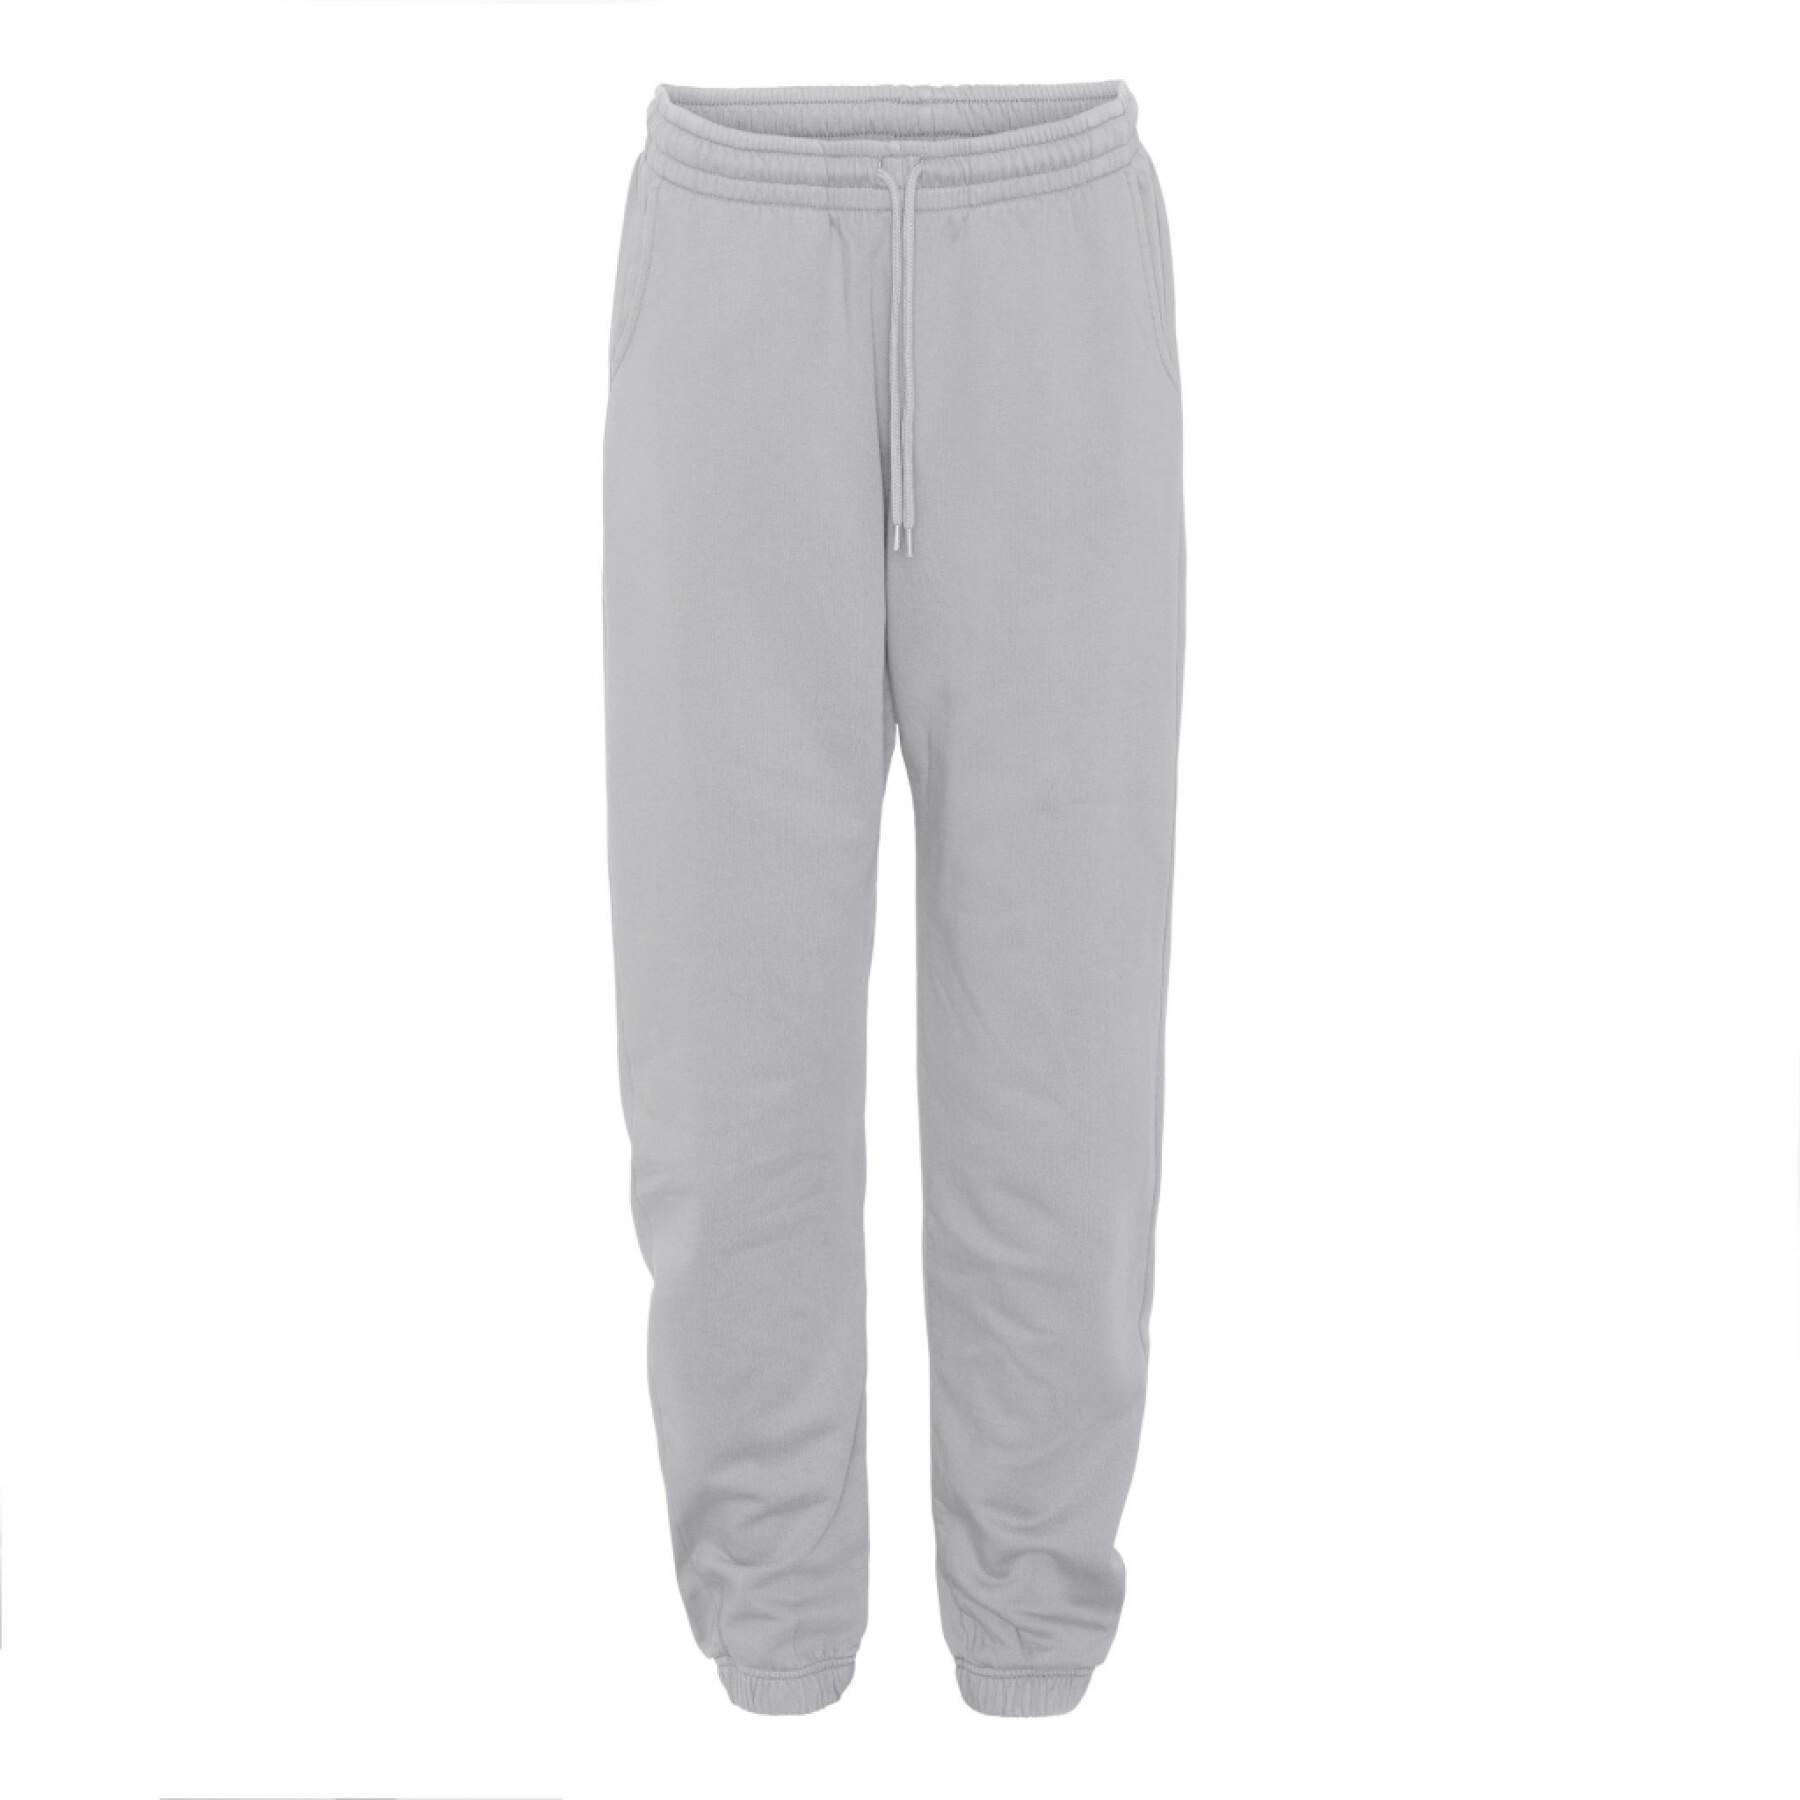 Pantalón de jogging Colorful Standard gris claro